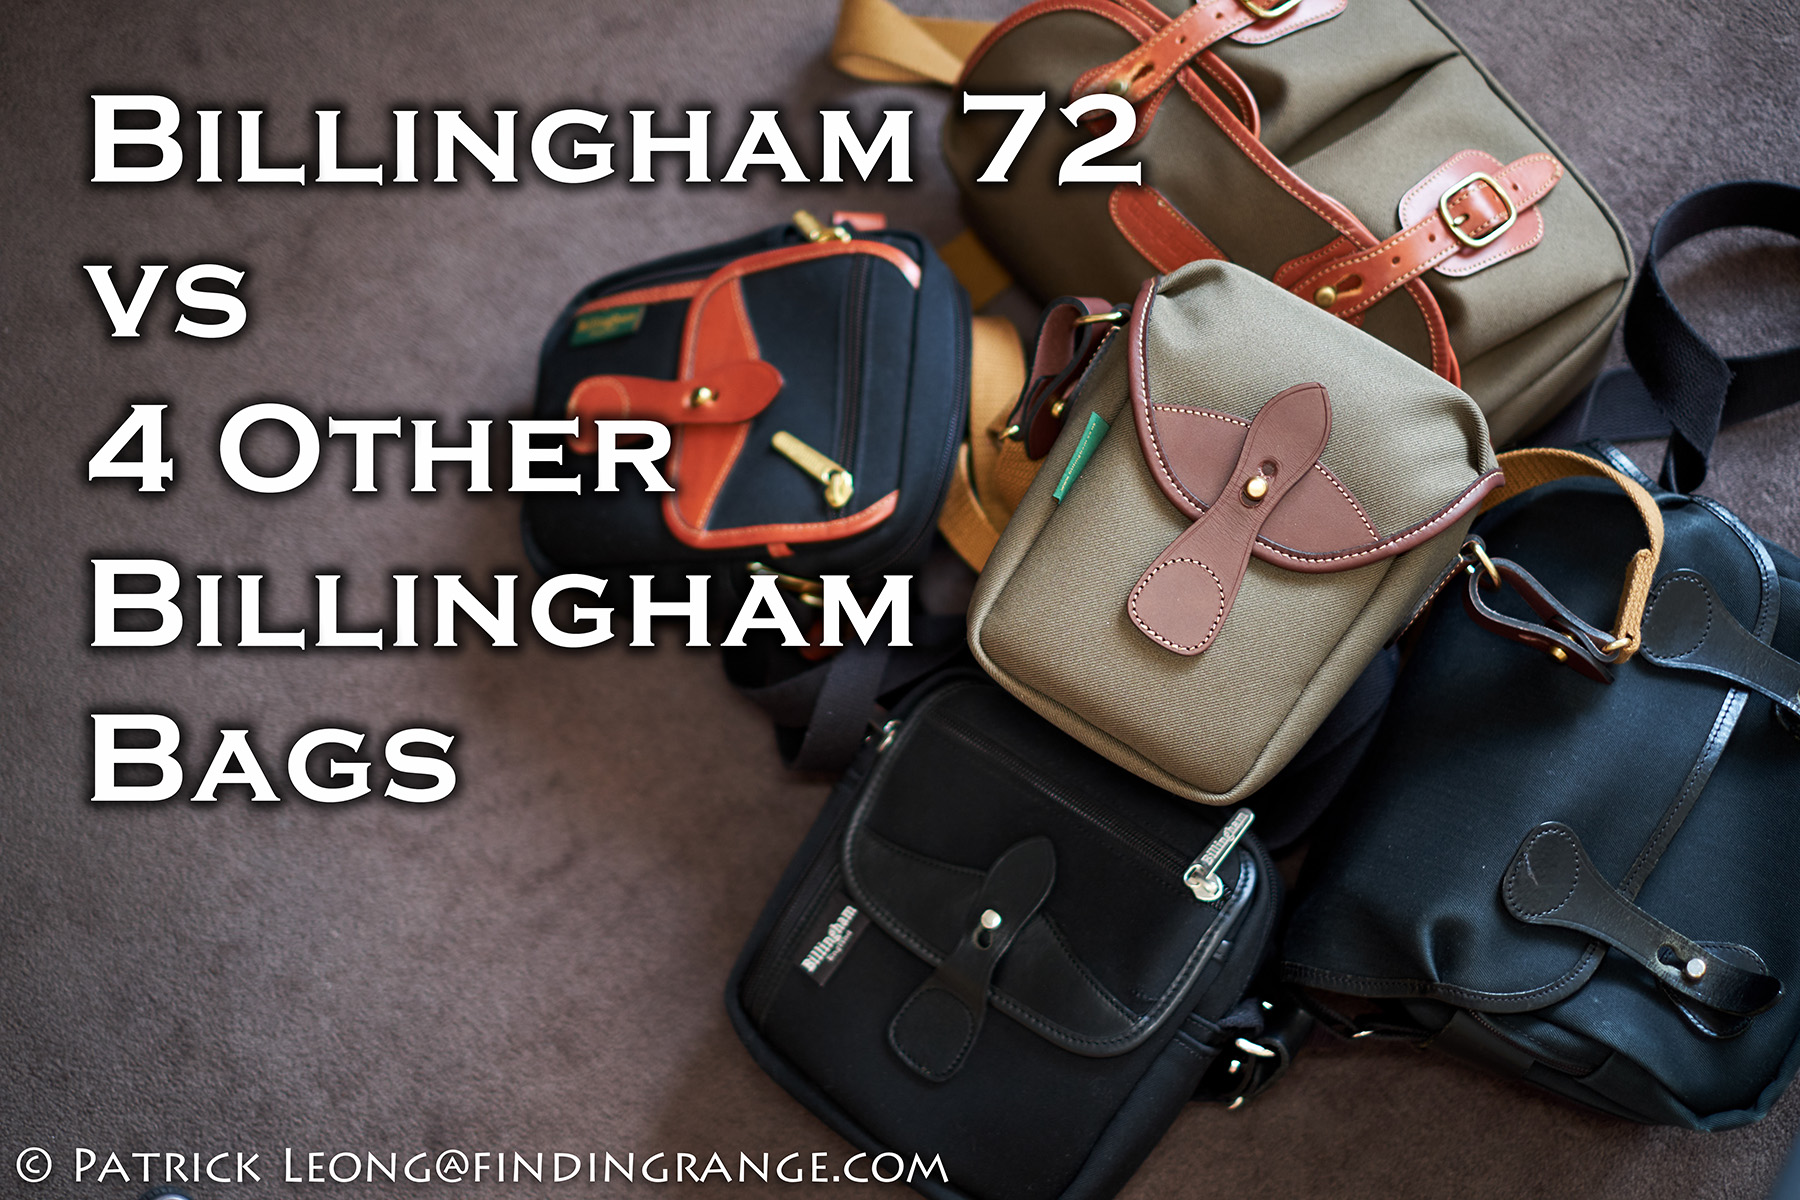 Billingham 72 vs. 4 Other Billingham Bags